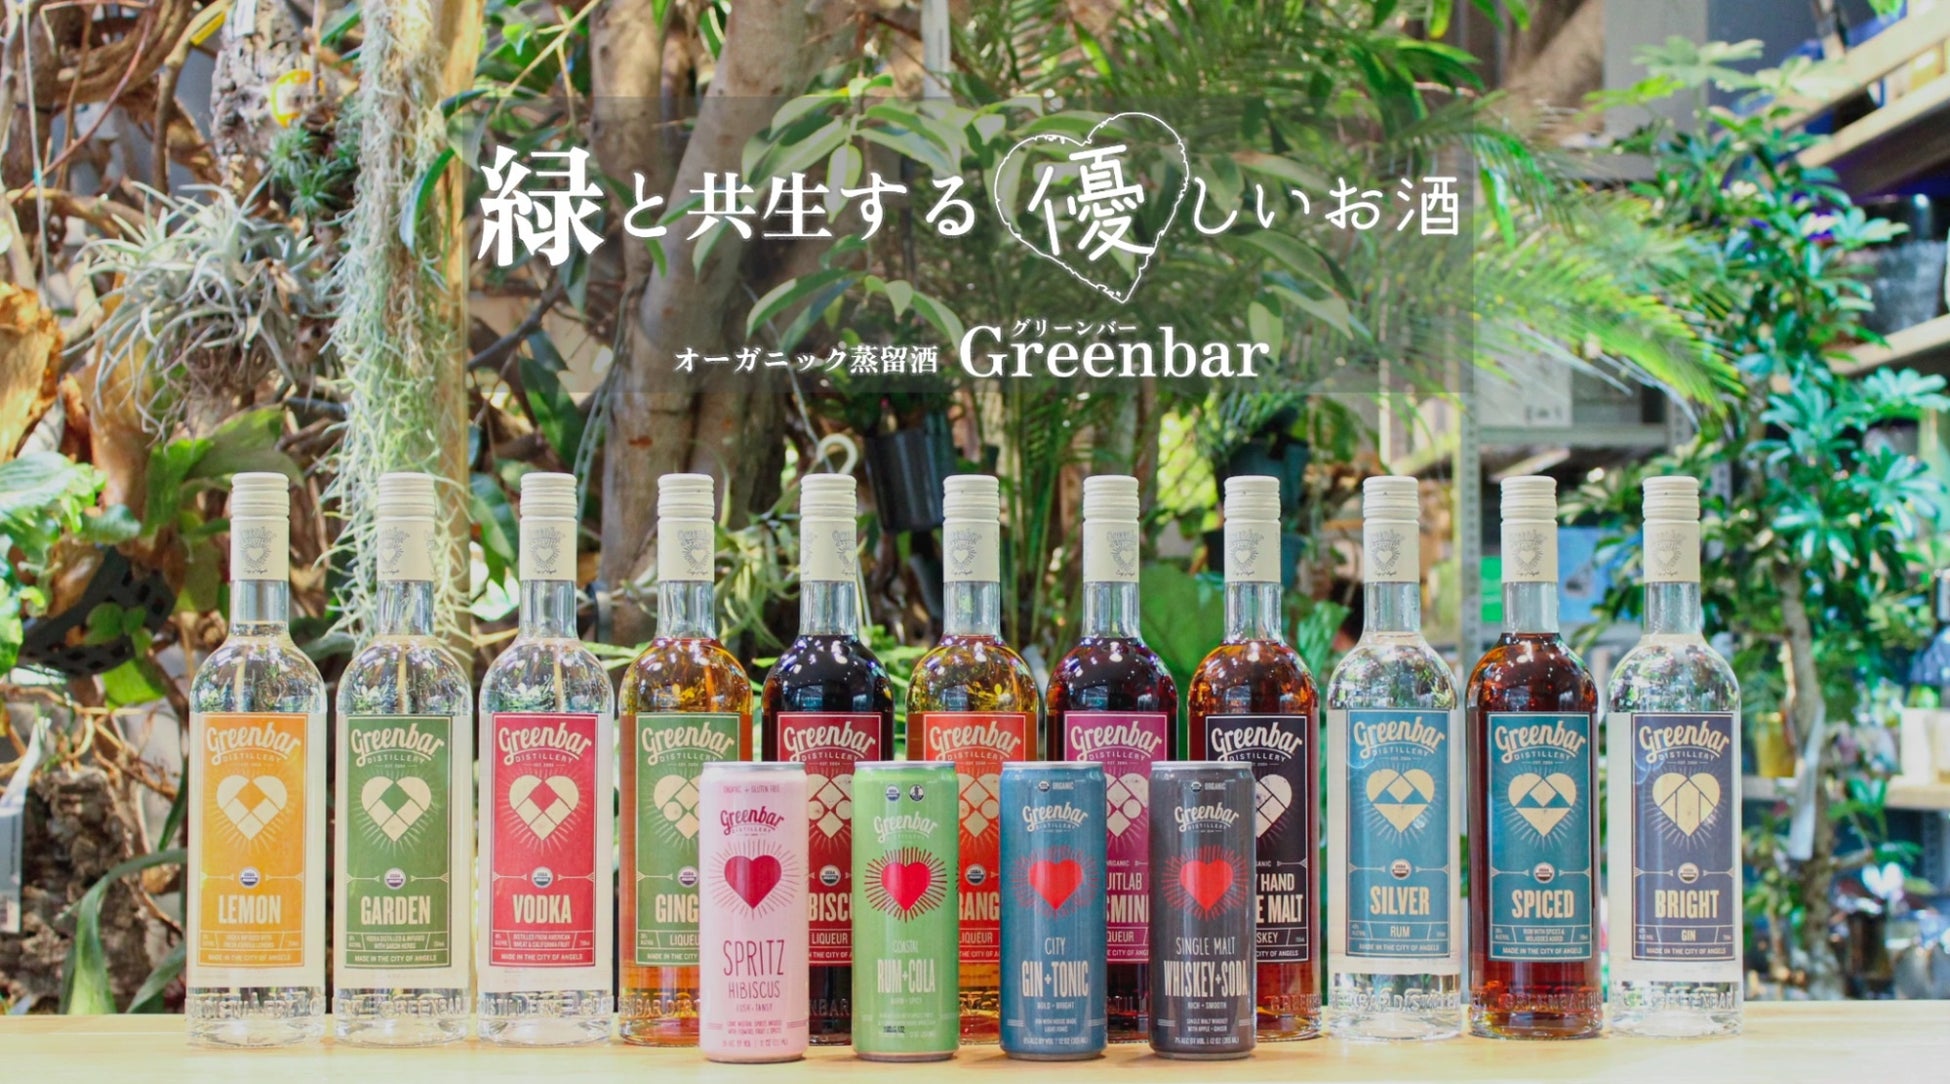 Shopifyアプリ「Allingift」が、飲めば飲むほど緑が増える「緑と共生するやさしいお酒」がコンセプトの『オーガニック蒸留酒Greenbar』公式オンラインショップにて採用のサブ画像2